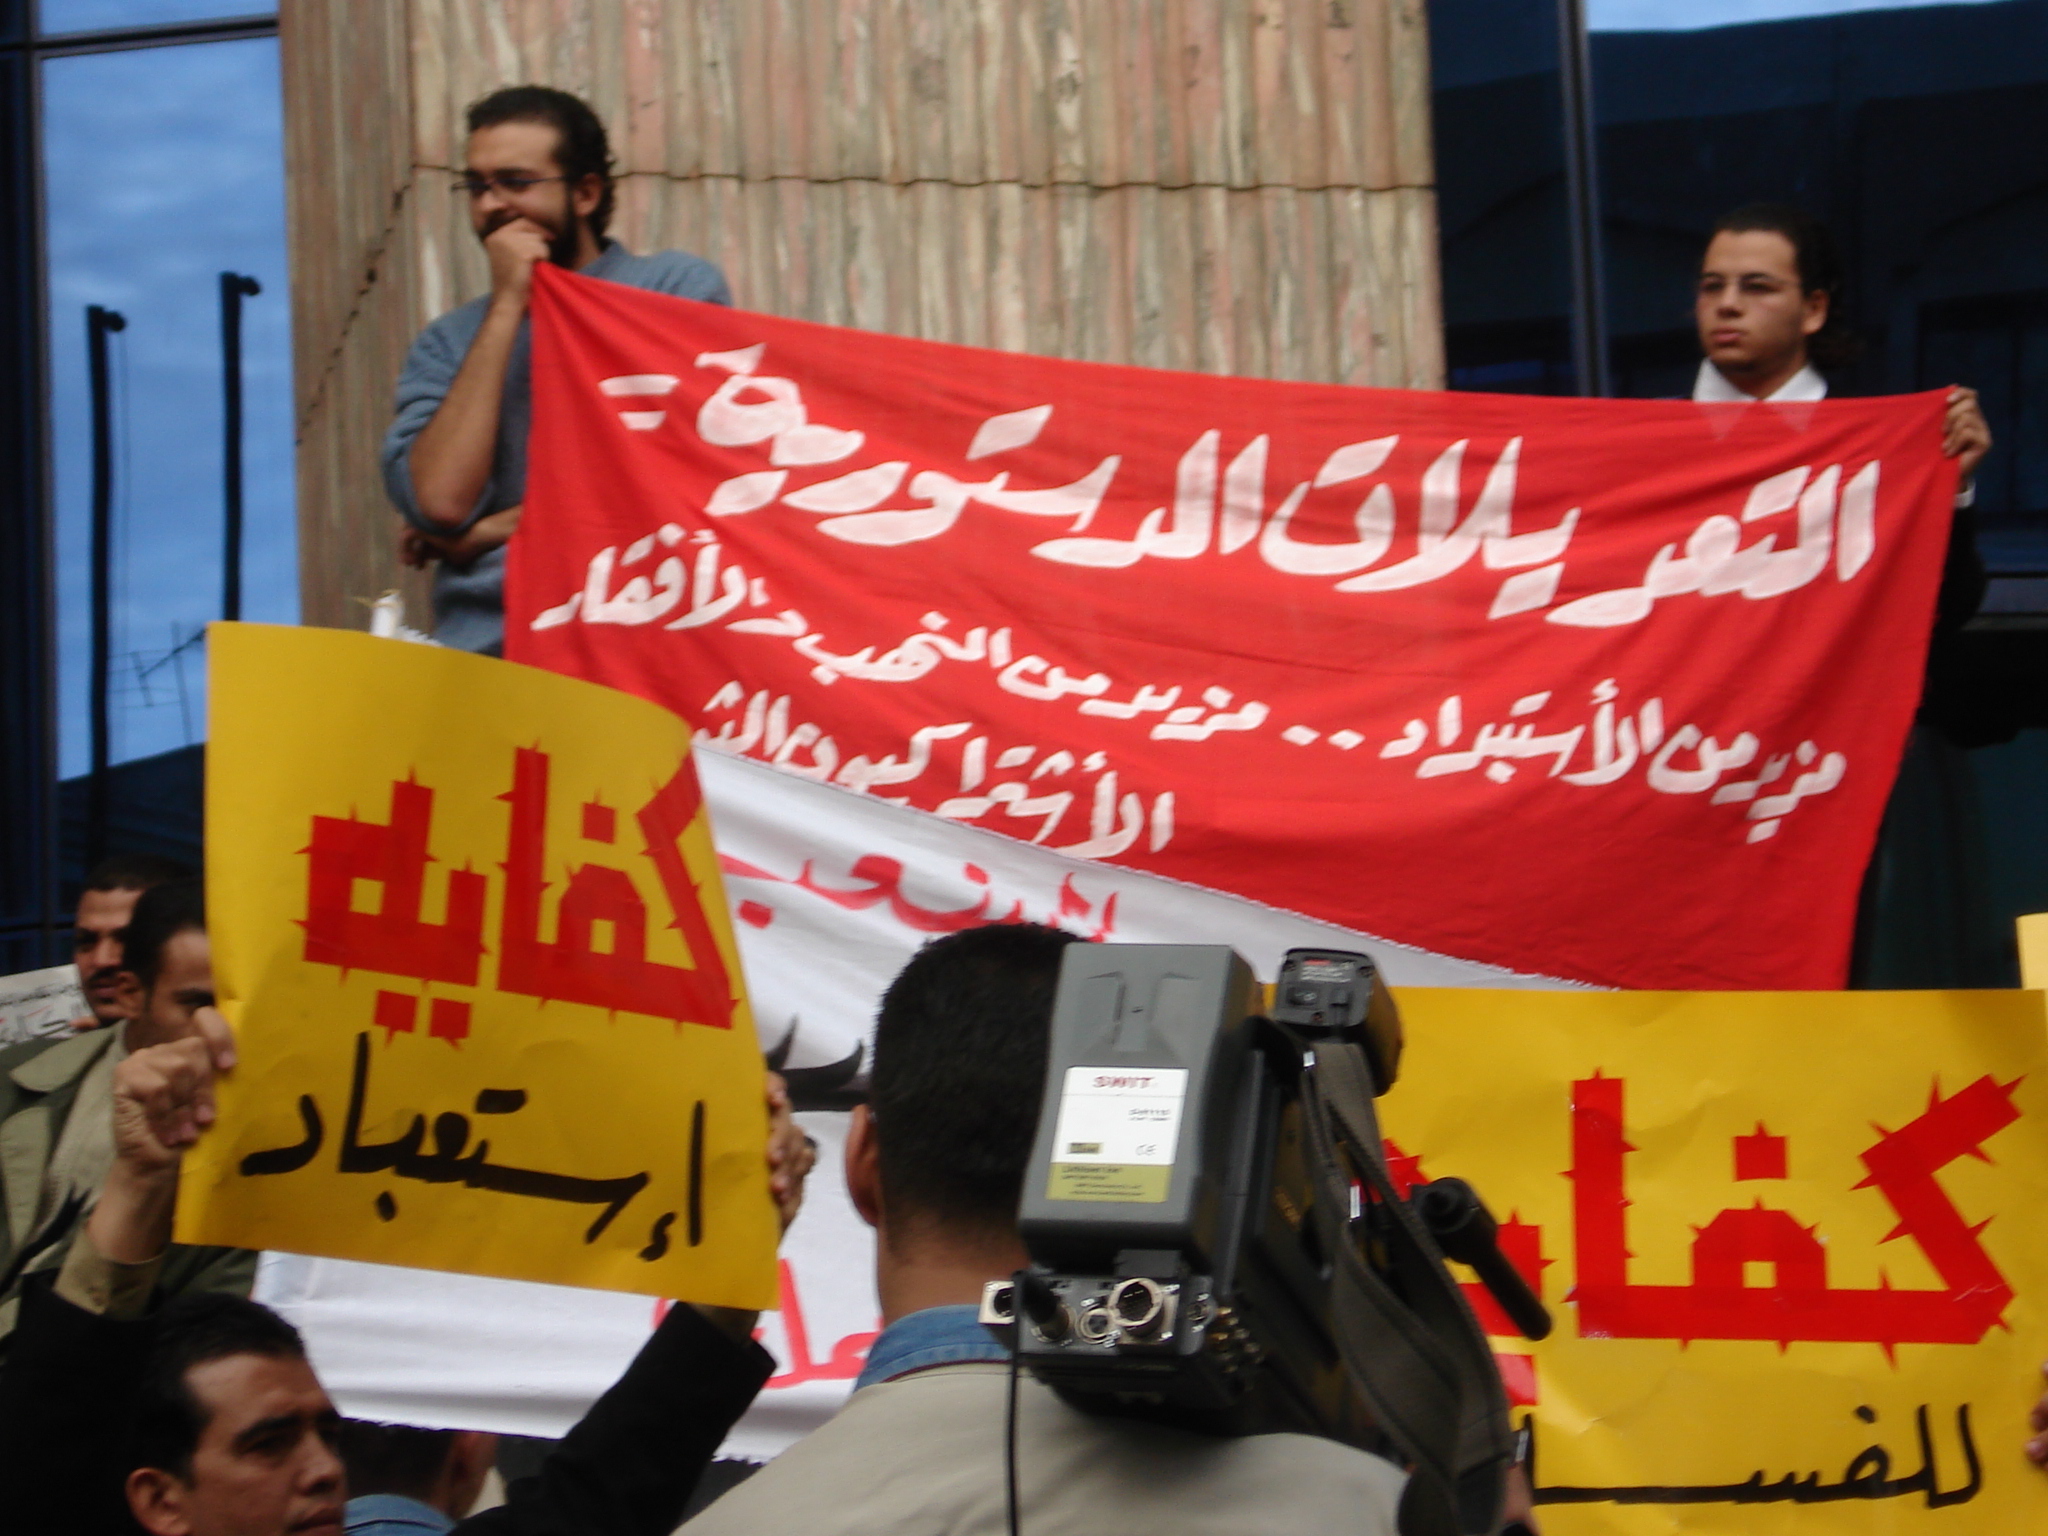 The Revolutionary Socialists, Photo by Alexandra Sandels, Cairo, Press Syndicate, 12 Dec 06